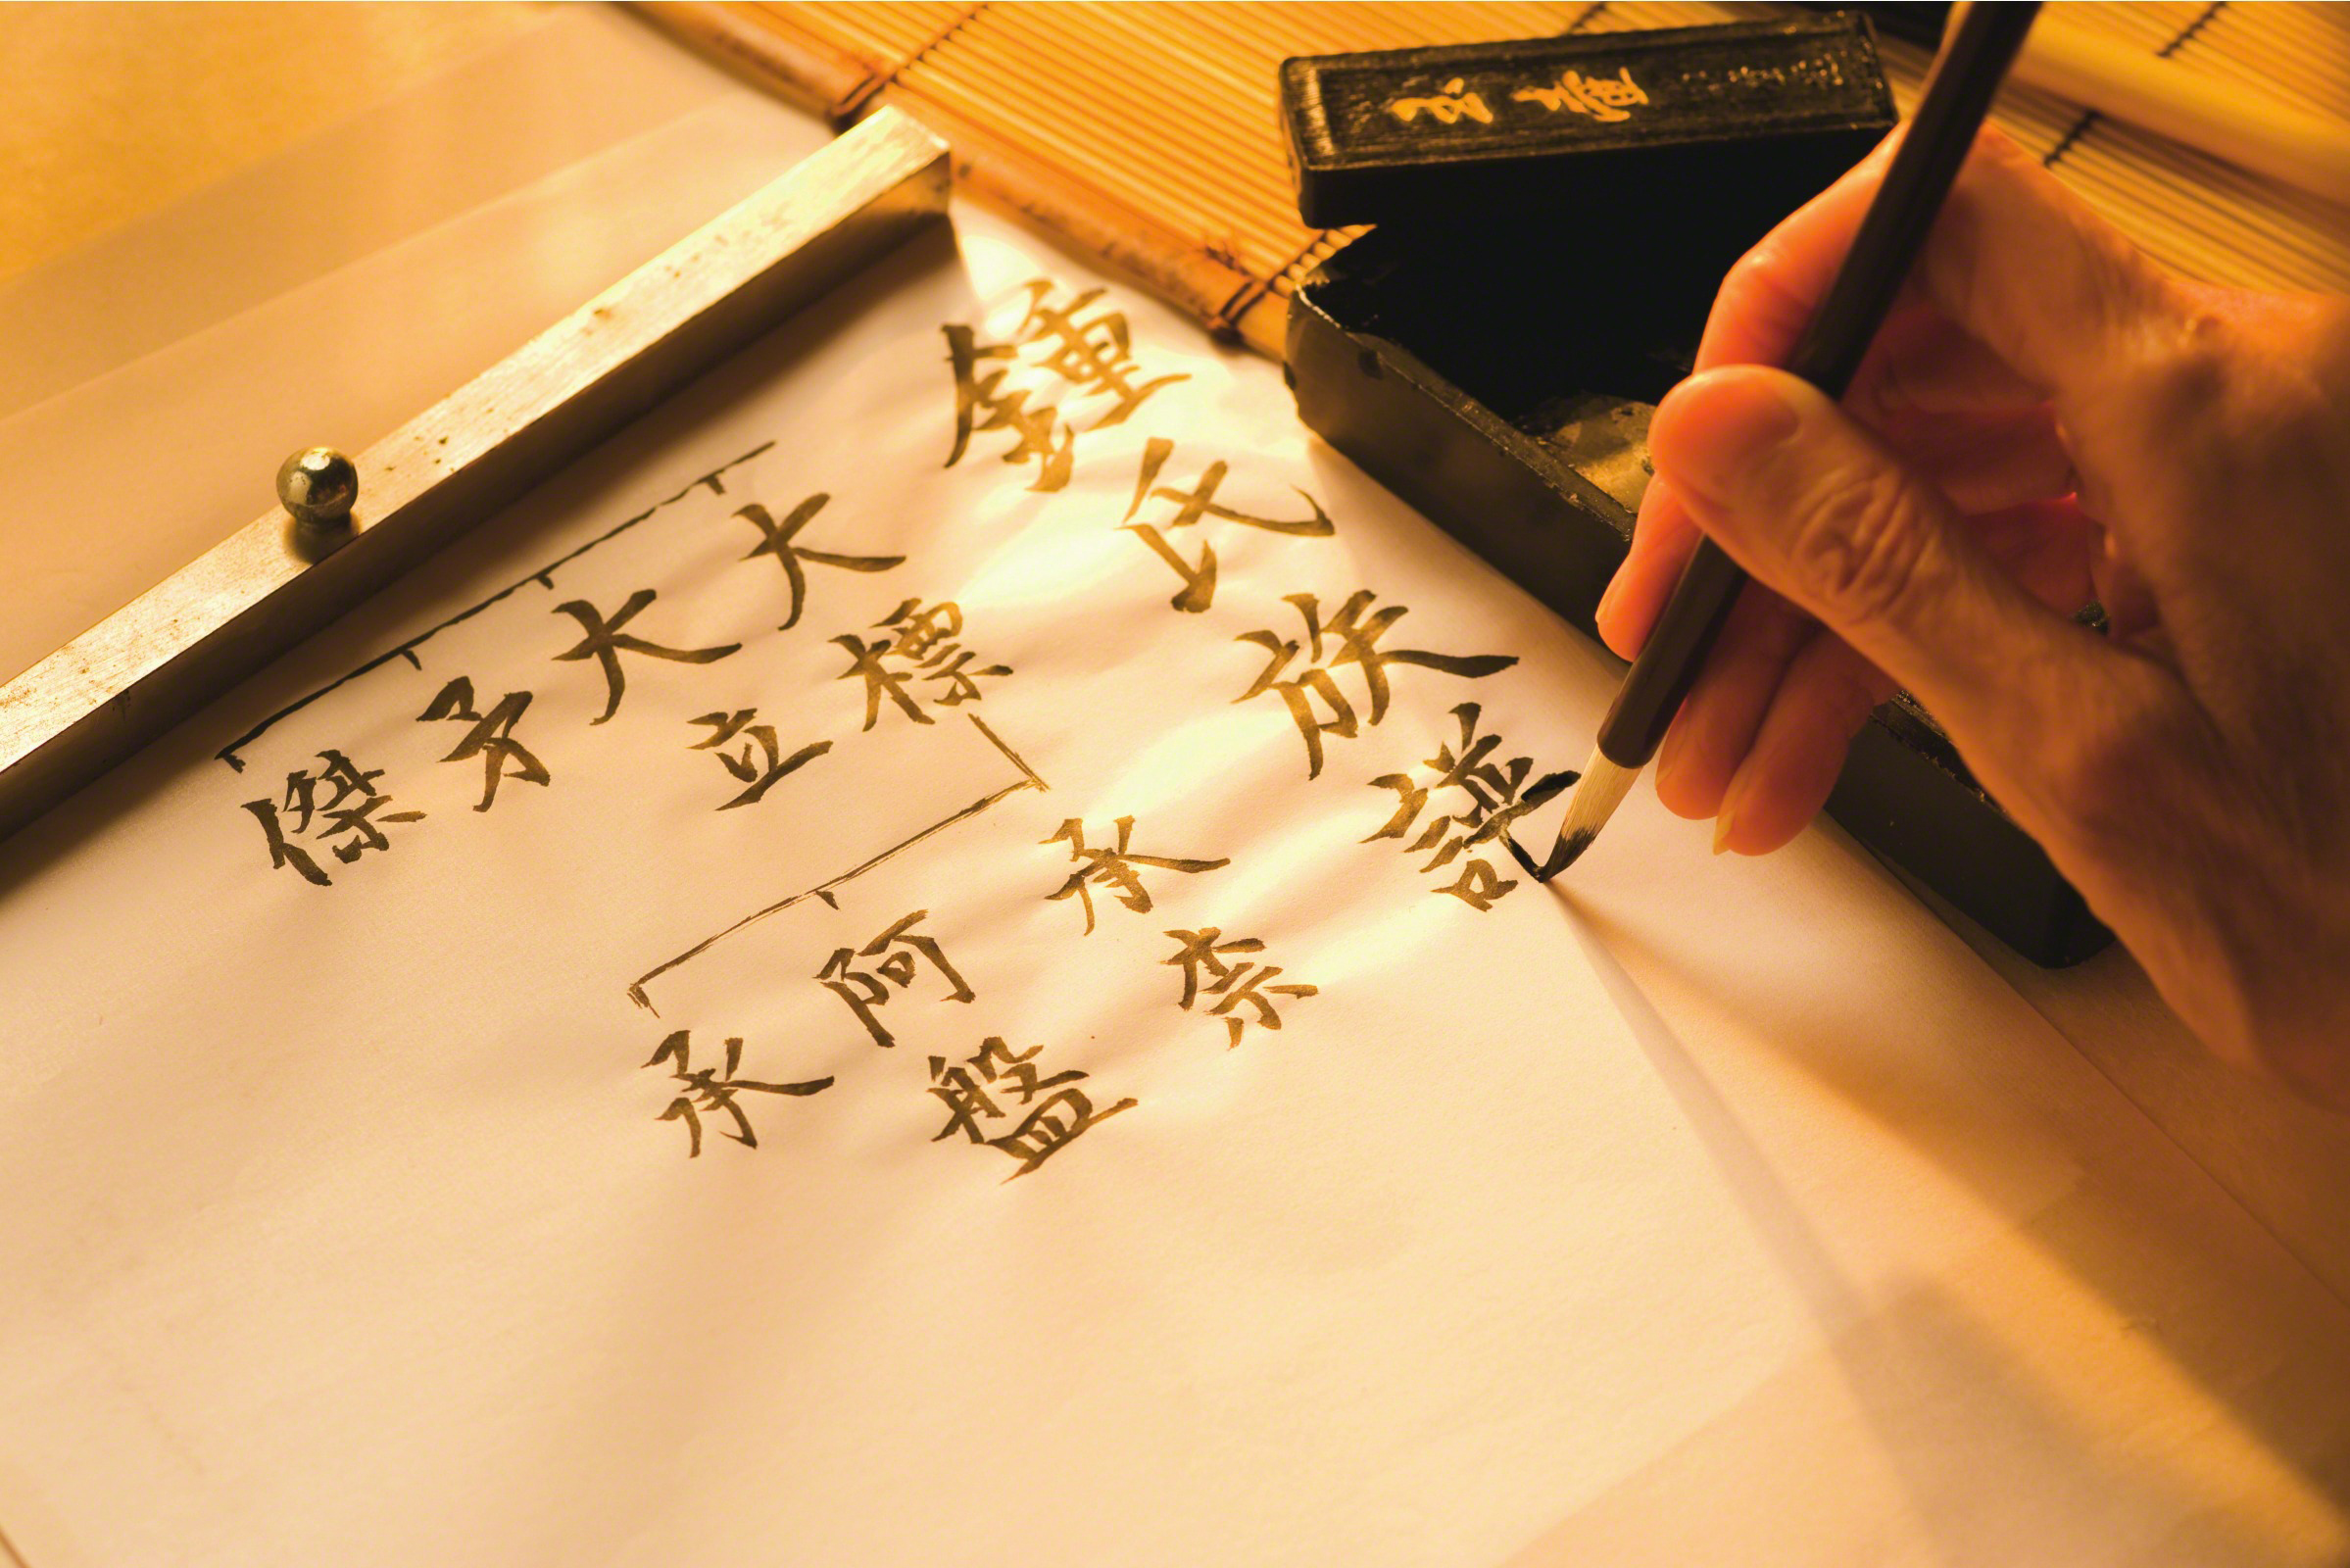 Wallpaper Lamps Lanterns Chinese Characters Photo